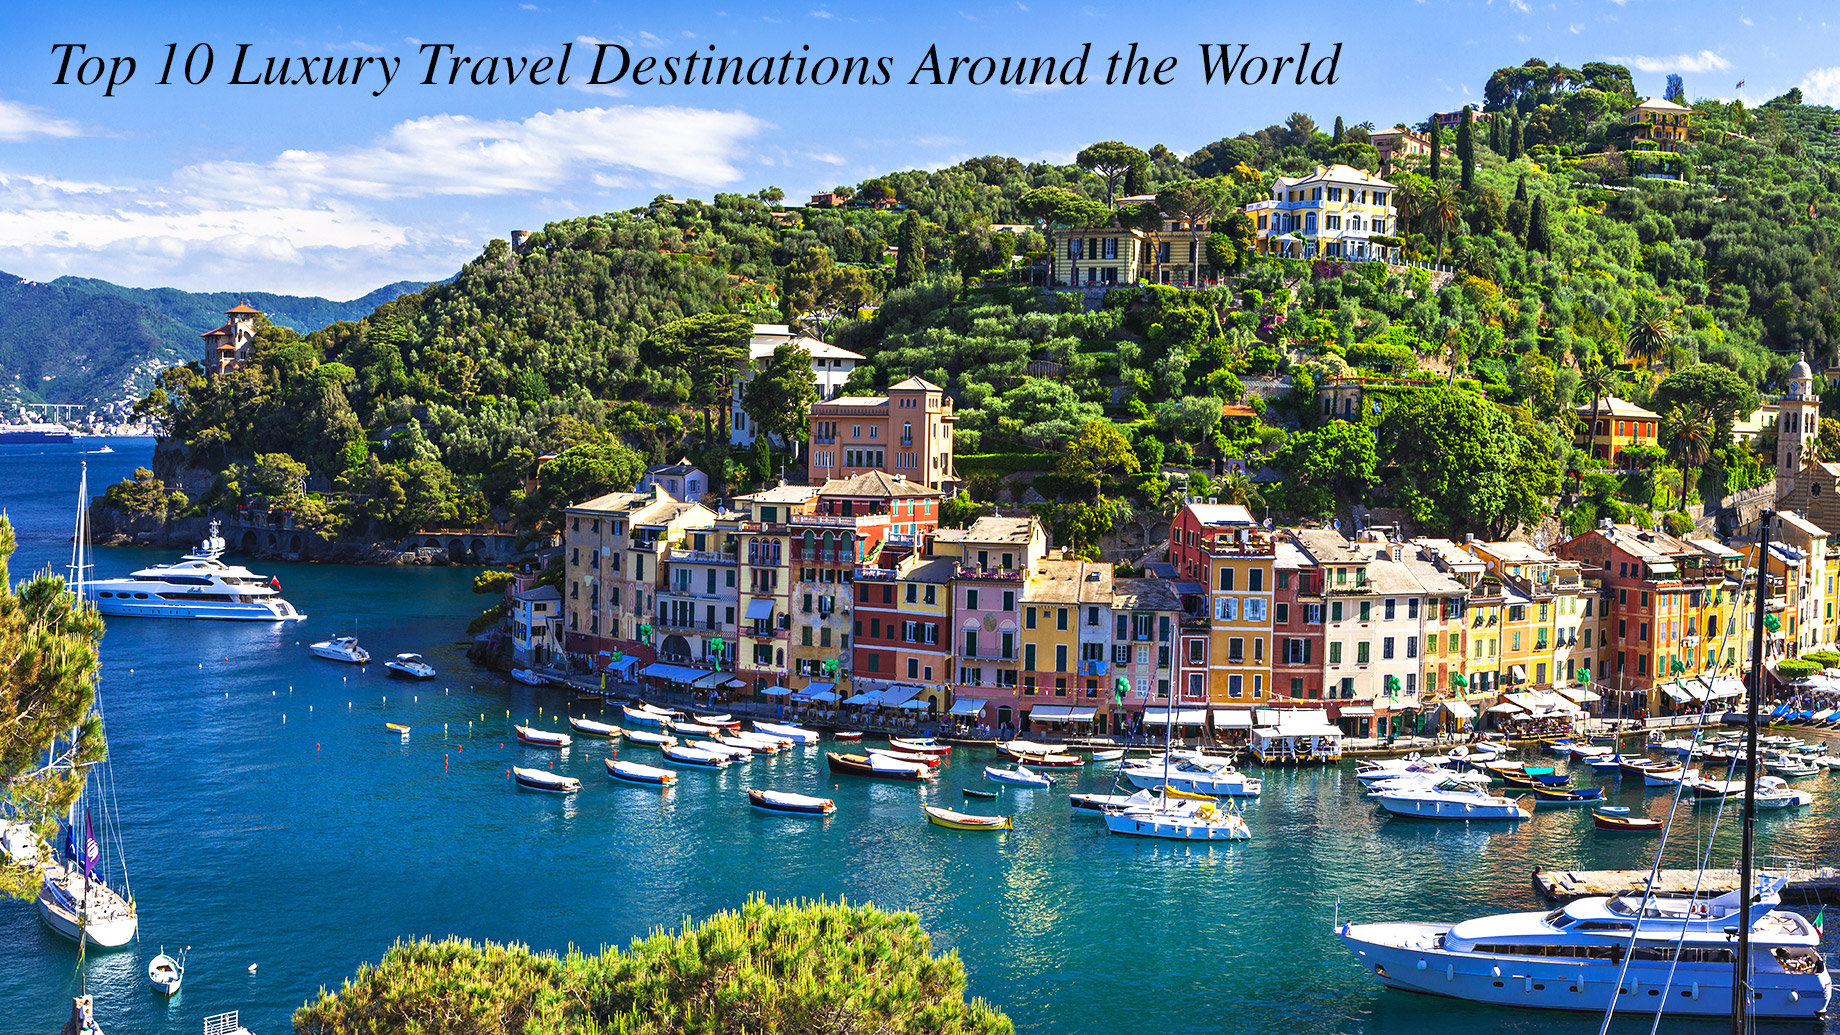 Top 13 Luxury Travel Destinations Around the World – The Pinnacle List